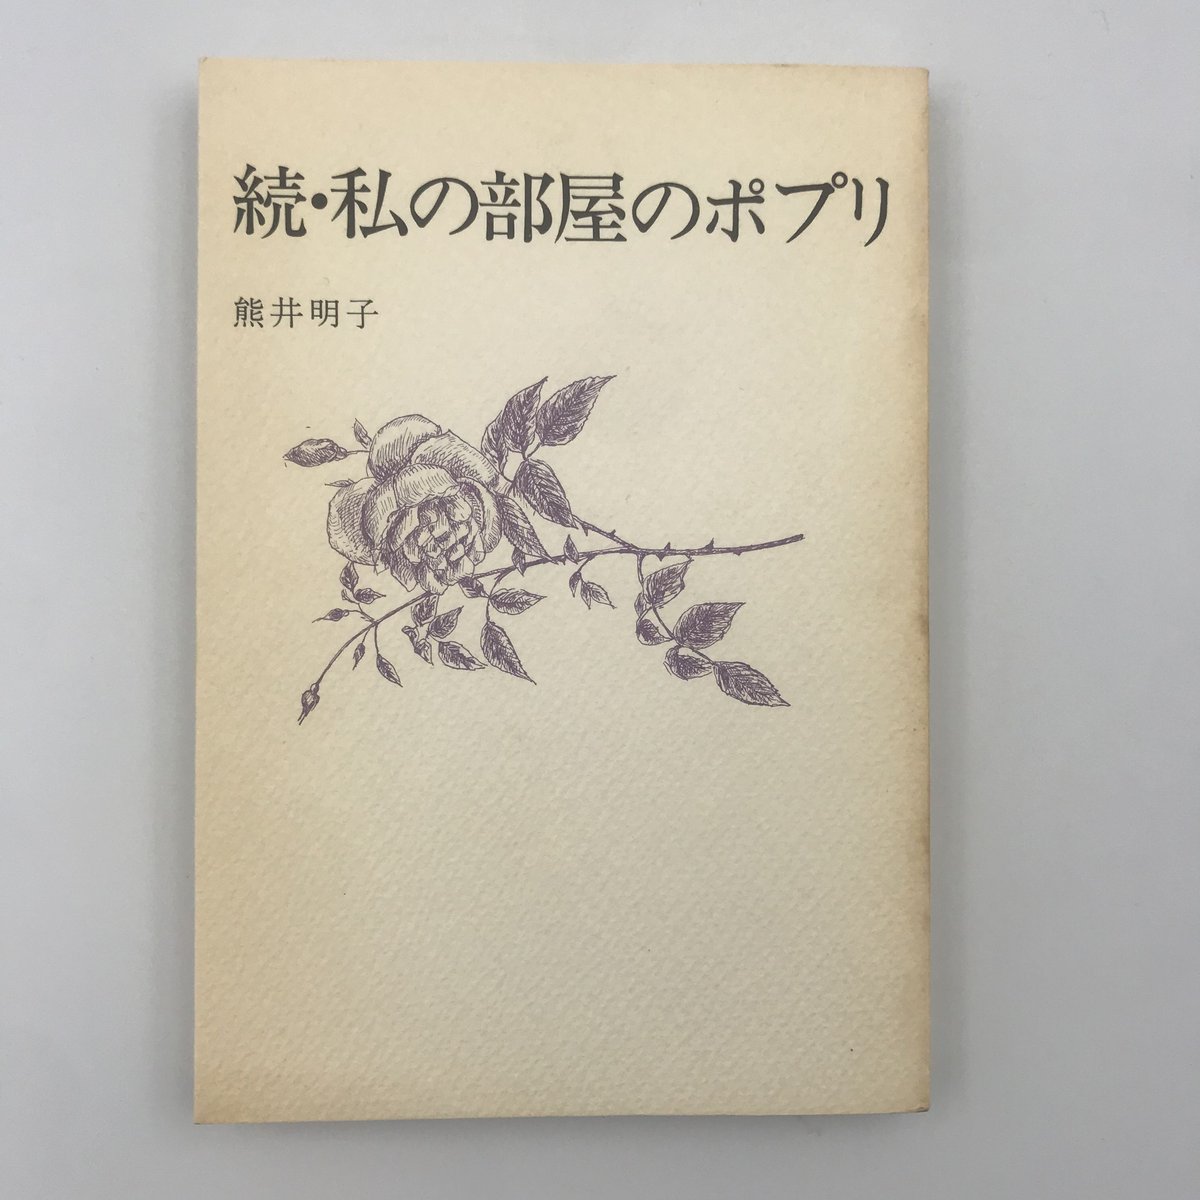 COWBOOKS　Author/　私の部屋のポプリシリーズ　Title/　熊井明子